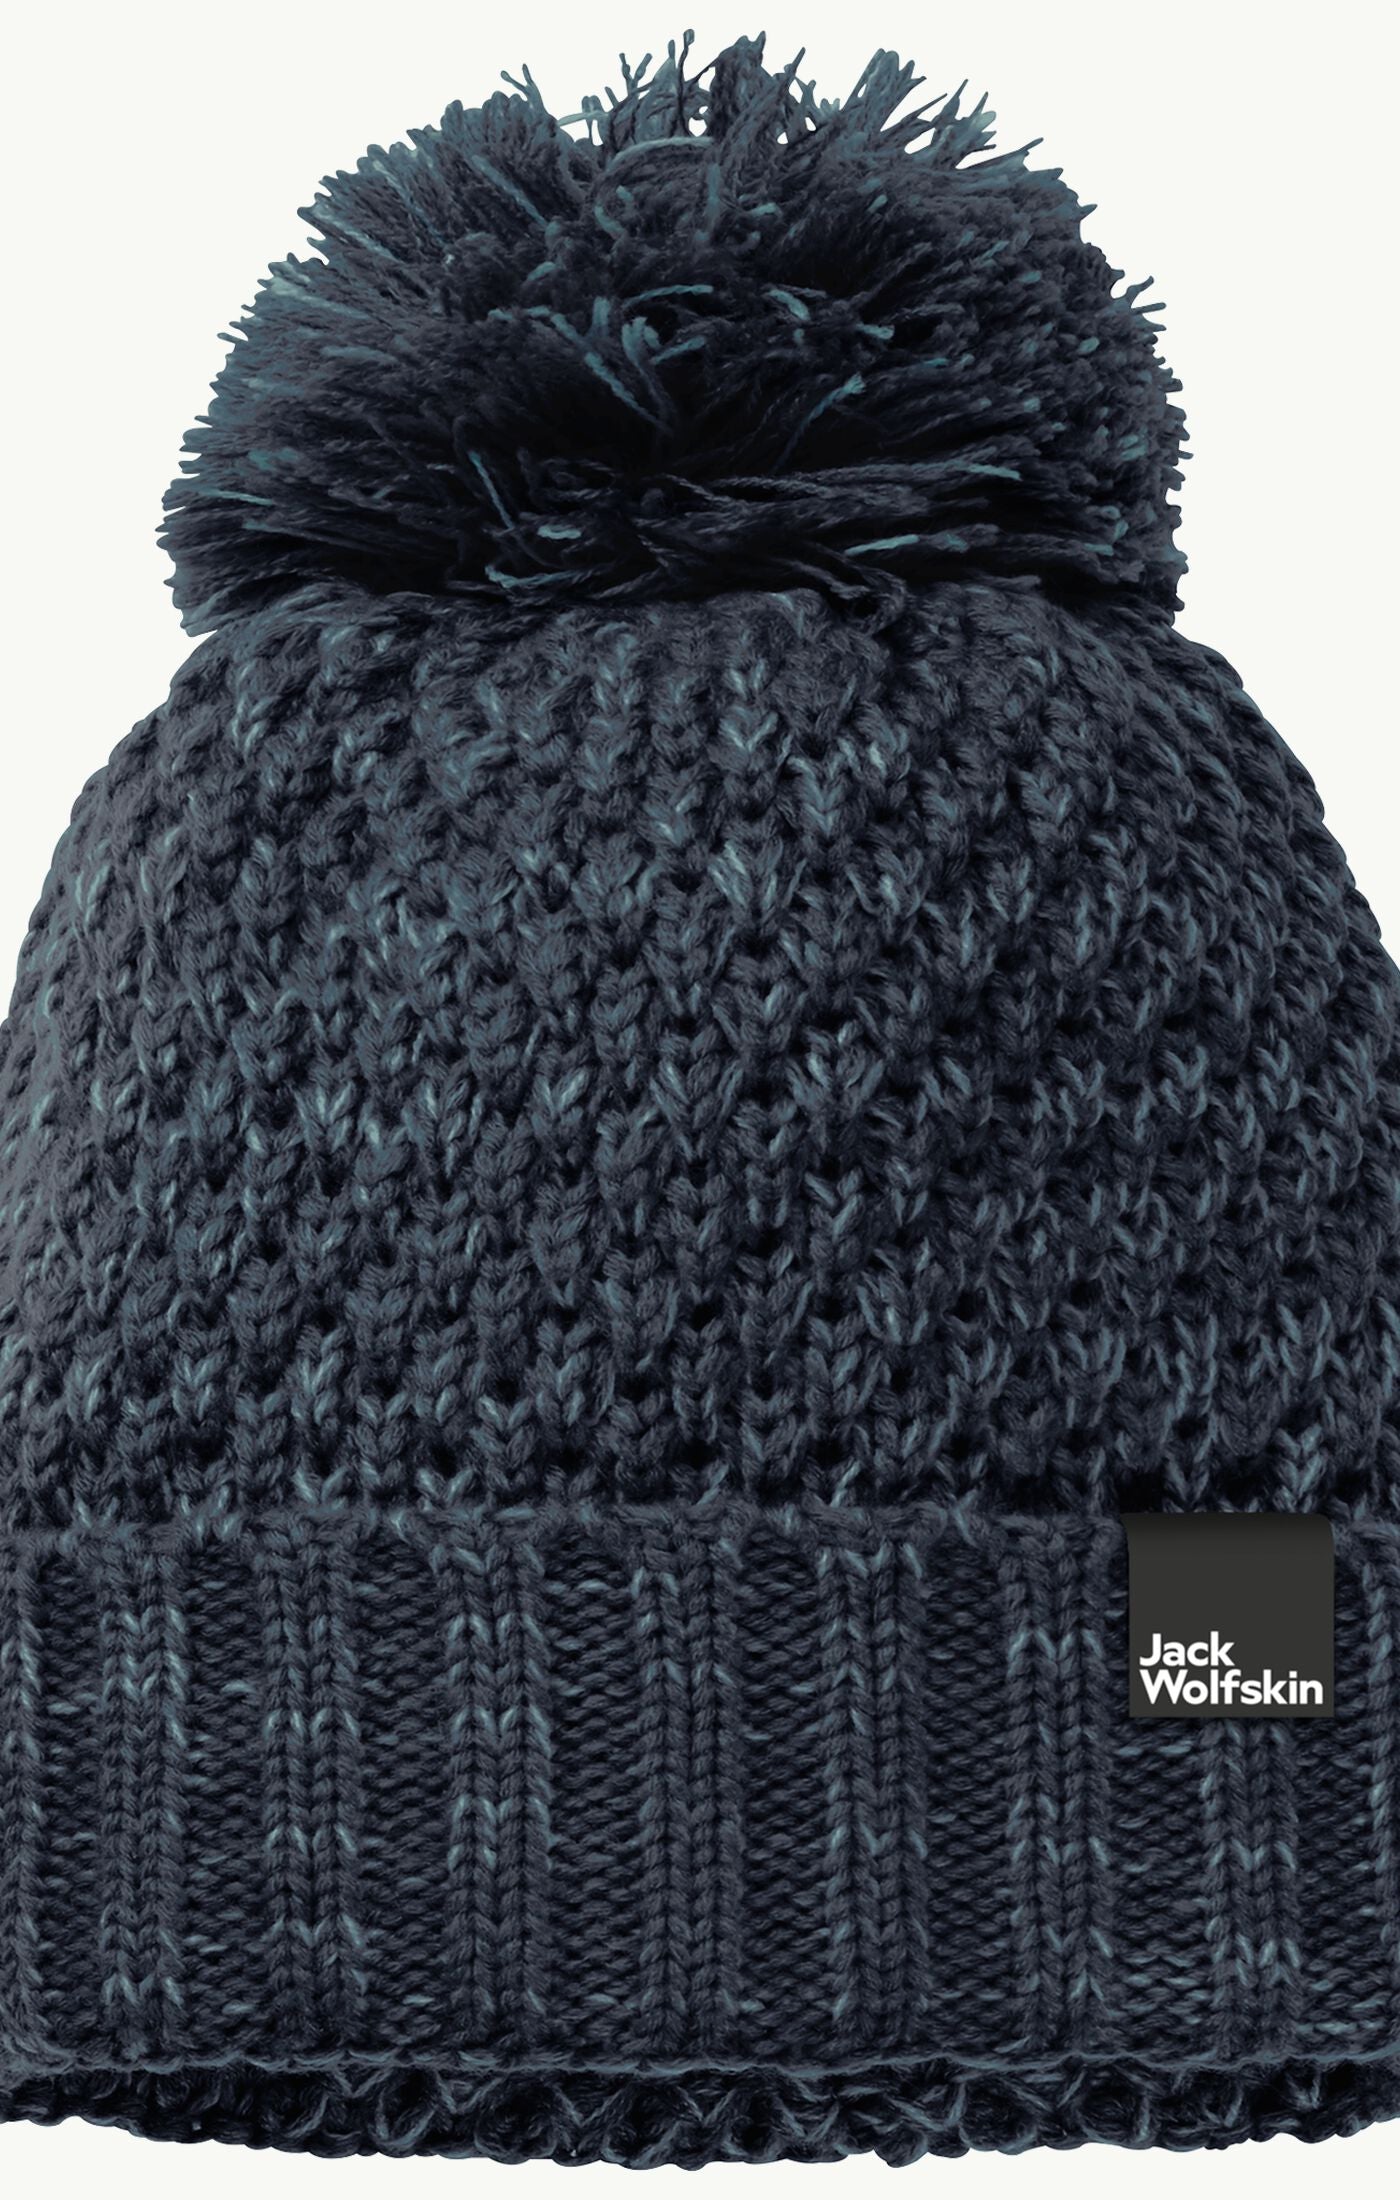 Jack Wolfskin Highloft Knit Hat